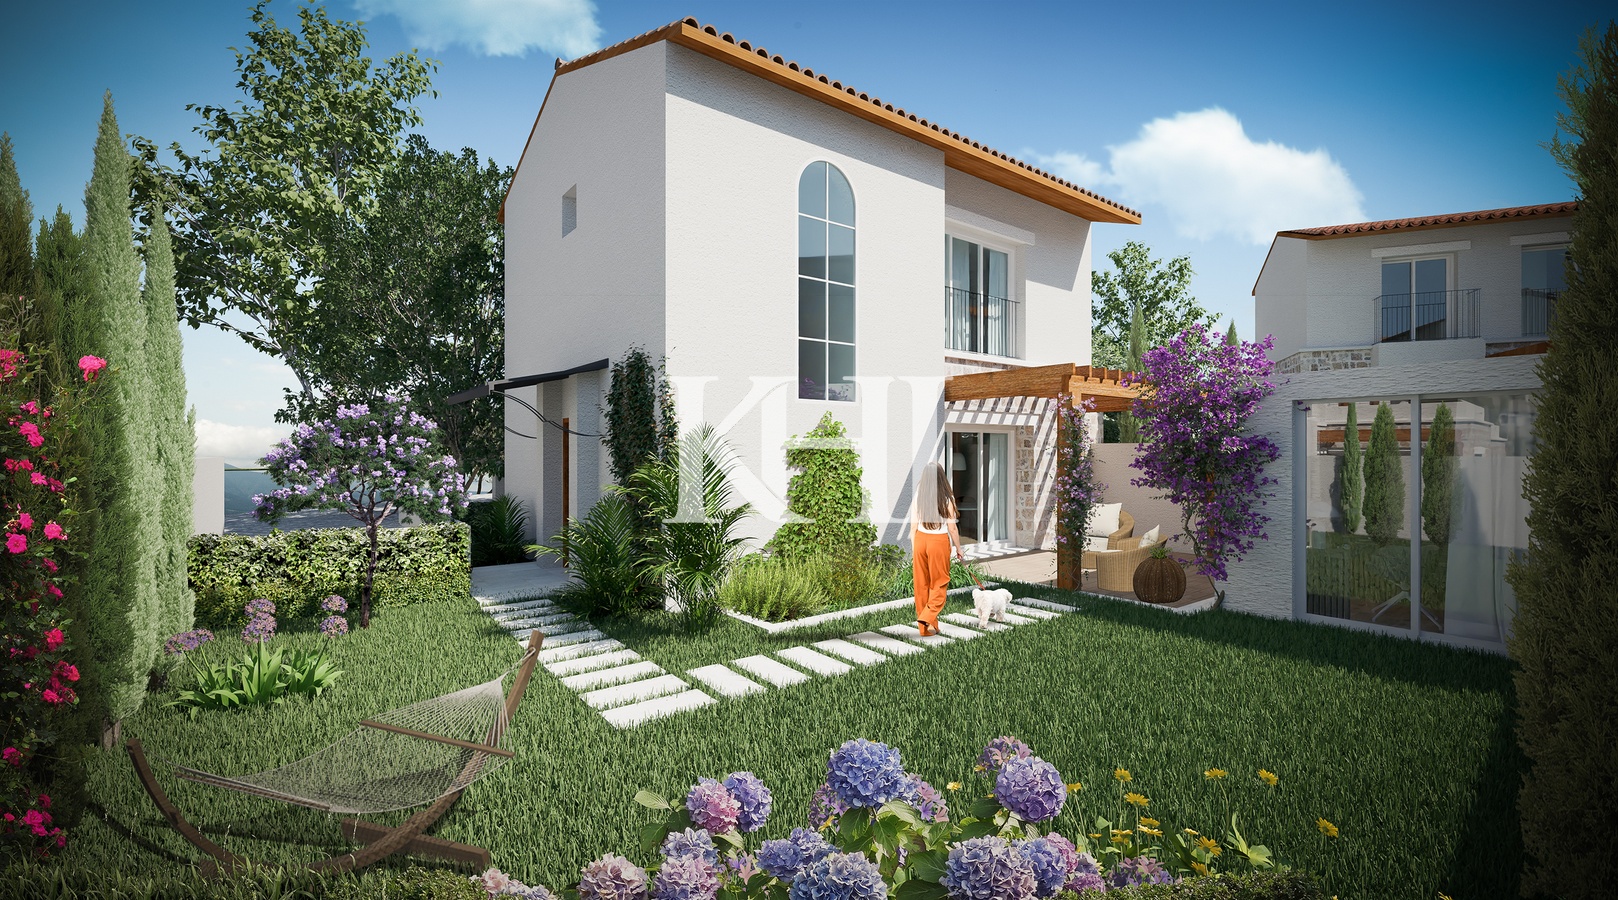 New Villa Project in Bodrum Slide Image 12